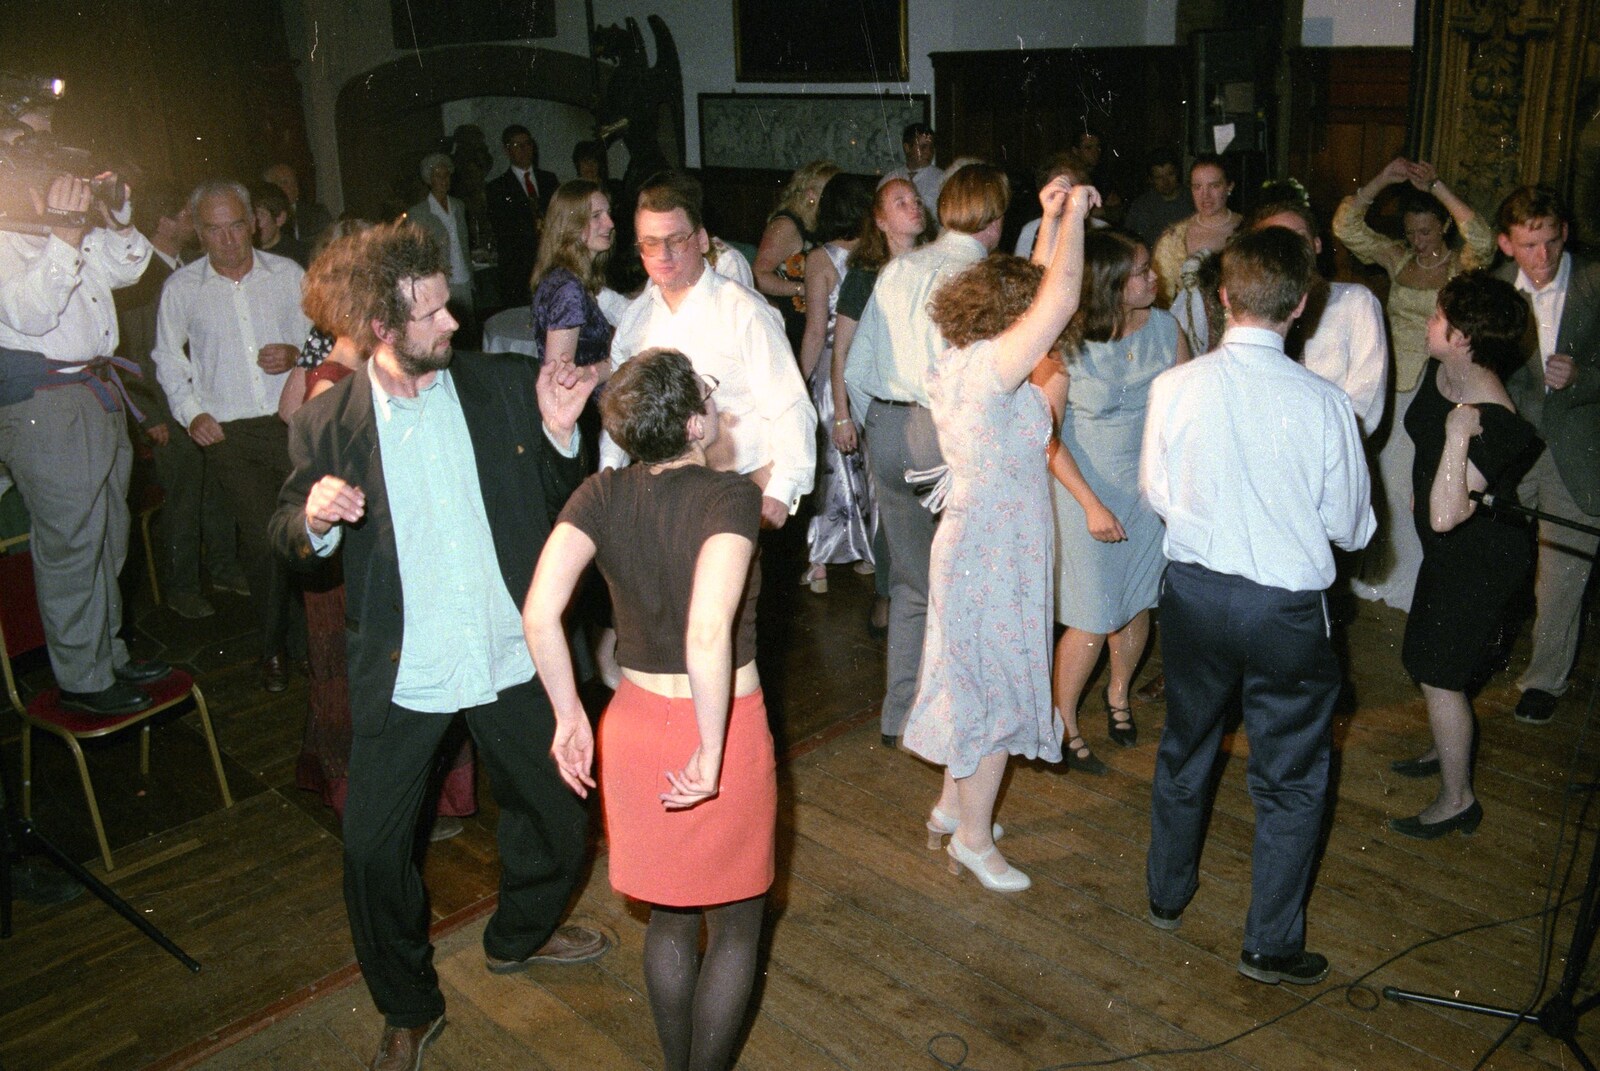 More dancing from Stuart and Sarah's CISU Wedding, Naworth Castle, Brampton, Cumbria - 21st September 1996